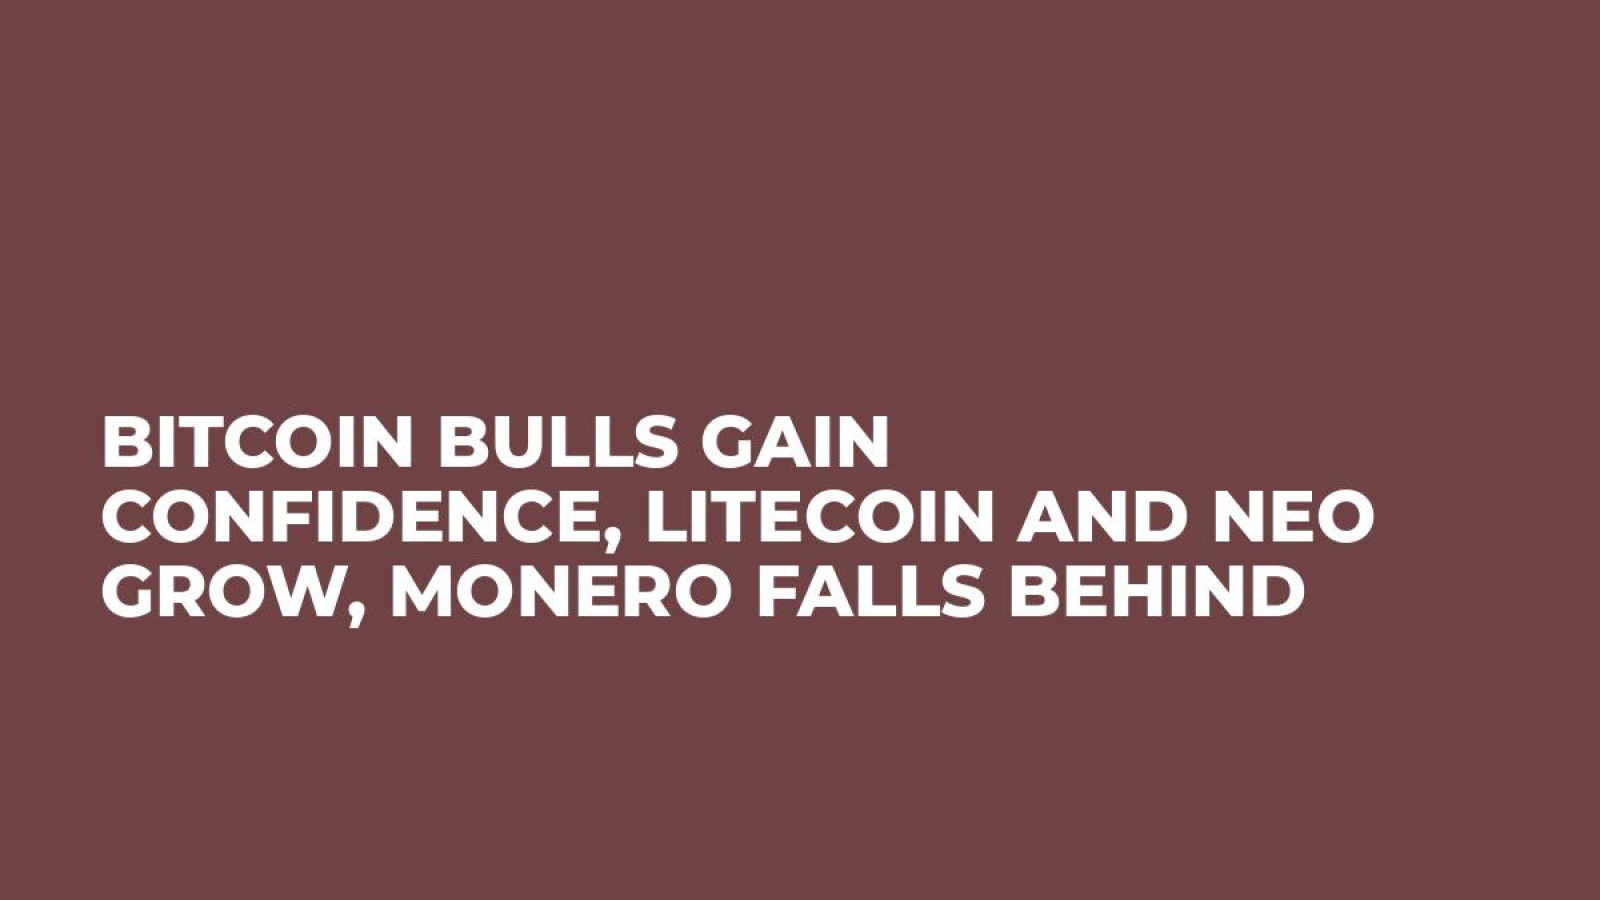 Bitcoin Bulls Gain Confidence, Litecoin and NEO Grow, Monero Falls Behind